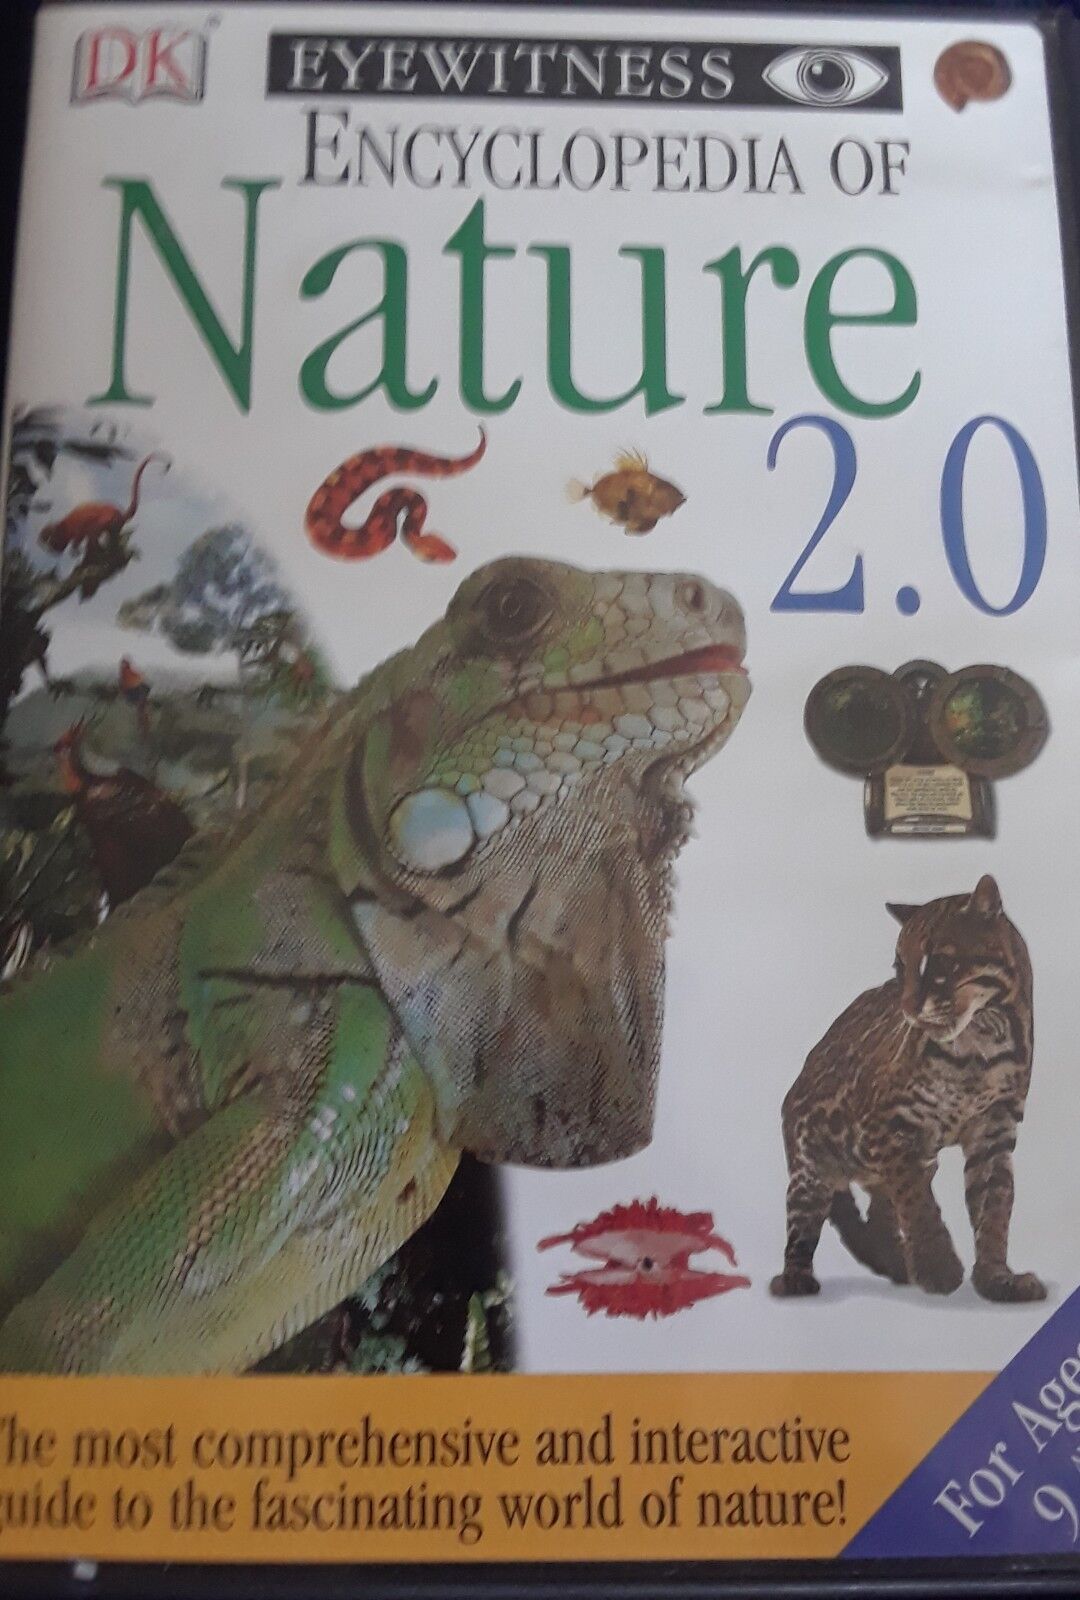 Encyclopedia Of Nature 2.0